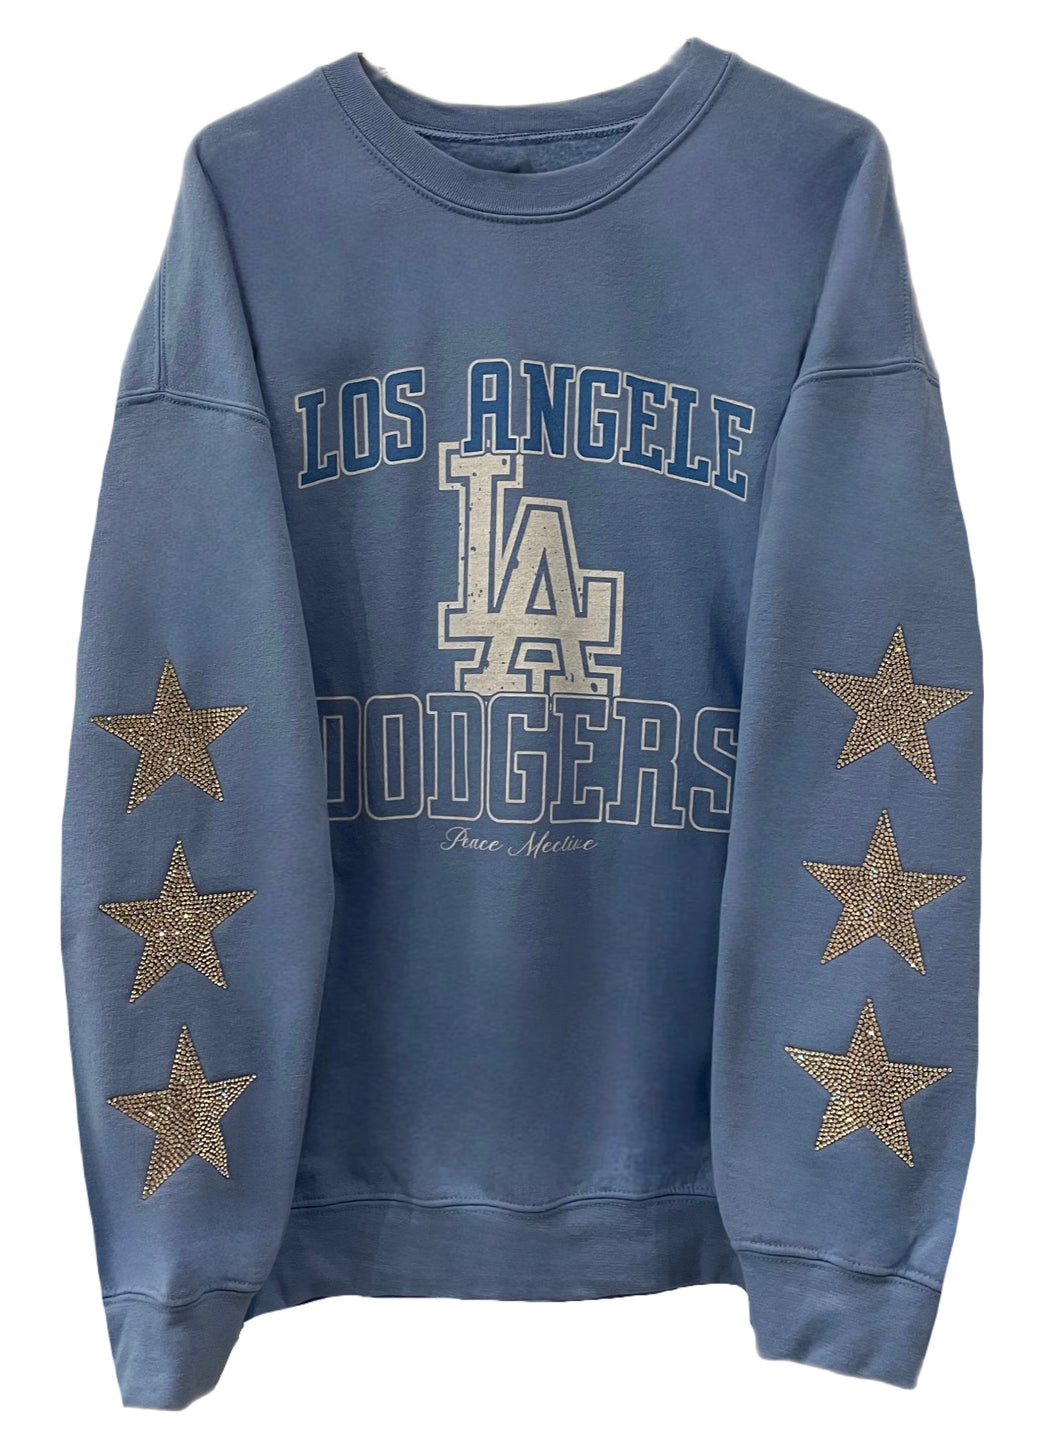 LA Dodgers, MLB One of a KIND Vintage Sweatshirt with Crystal Star Design